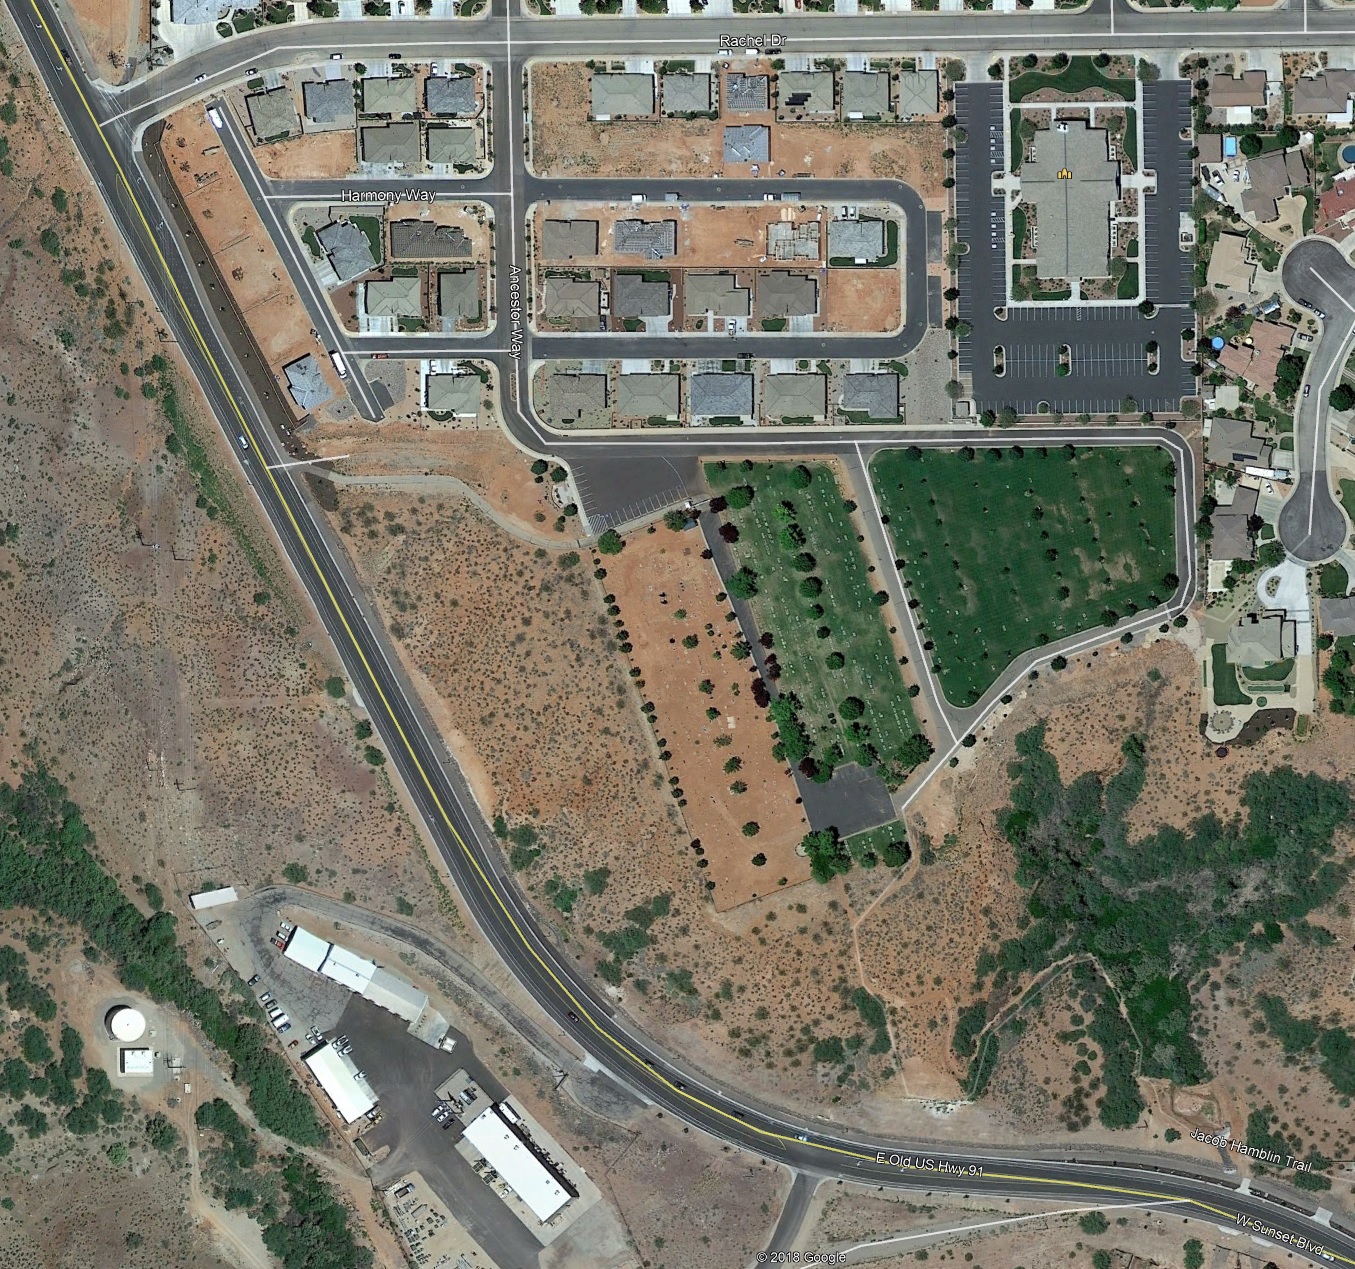 Aerial view of the Santa Clara Cemetery